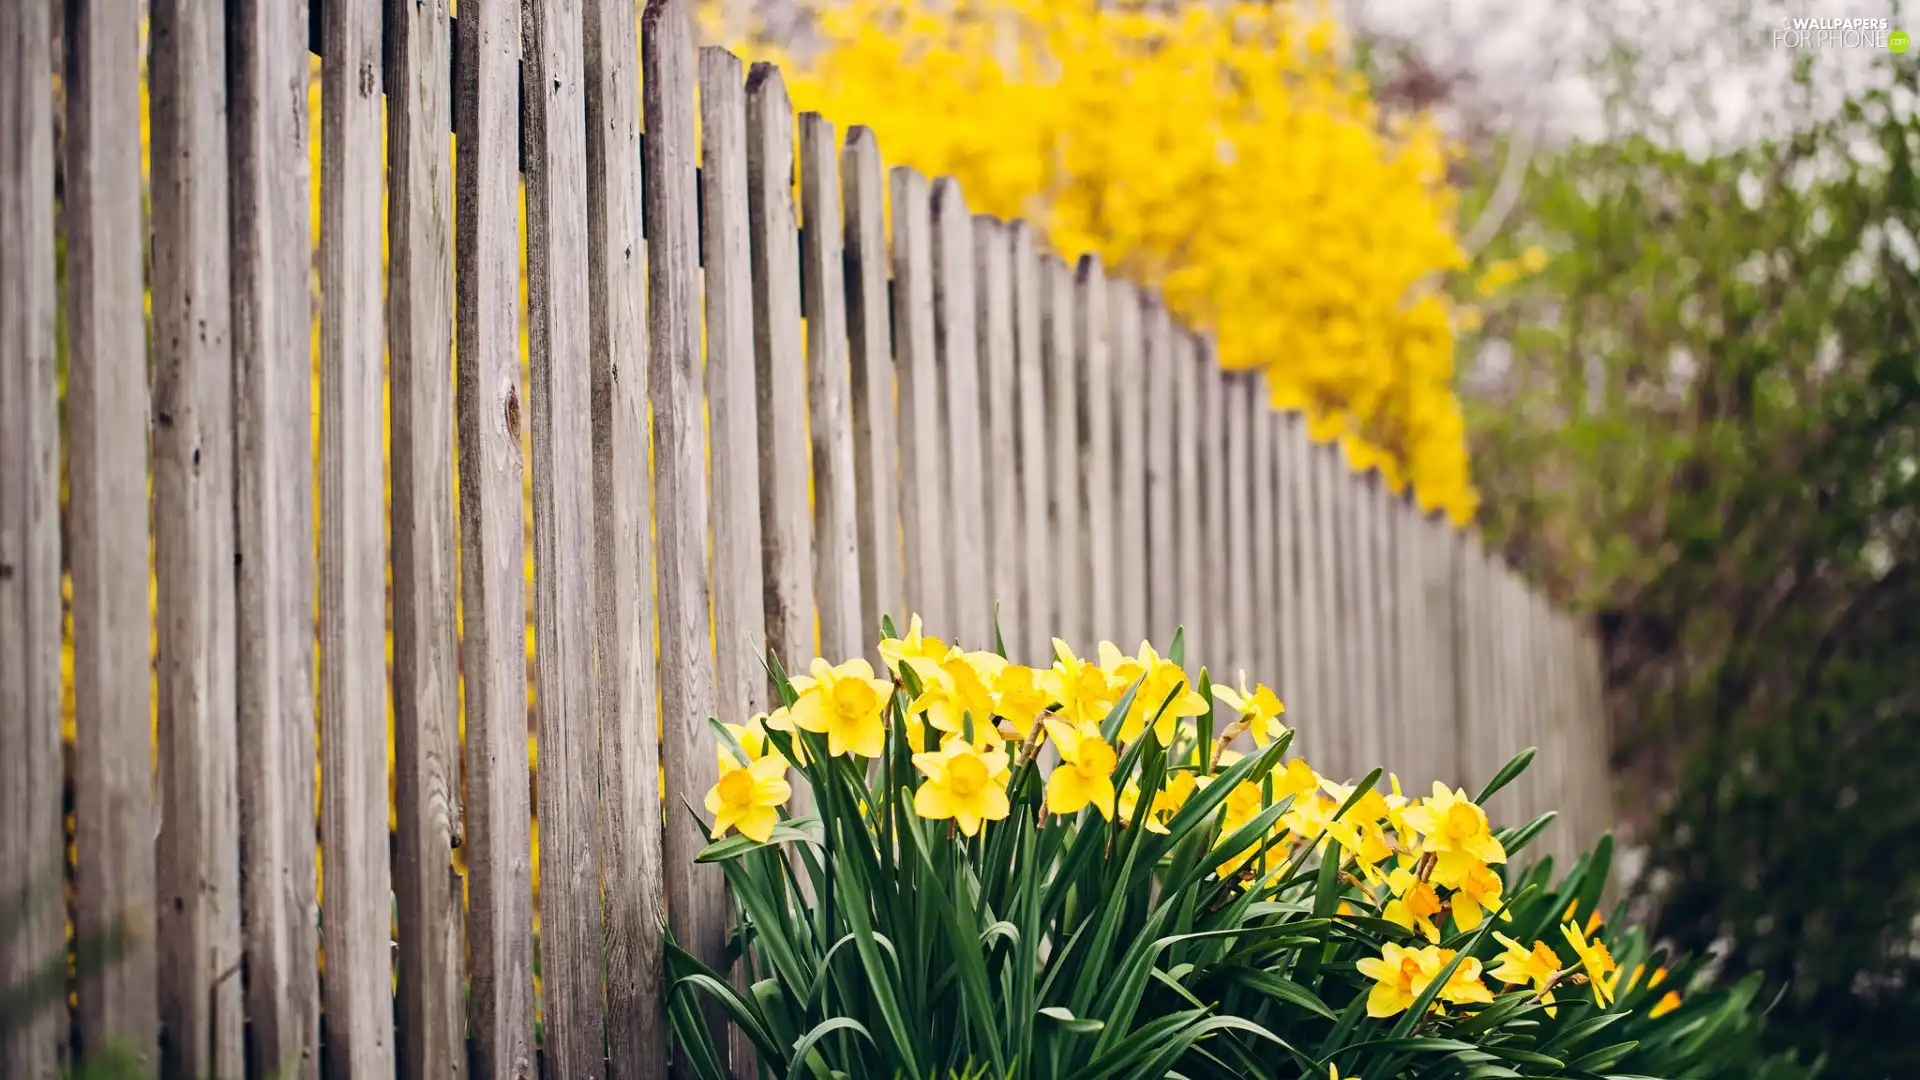 Fance, Flowers, Daffodils